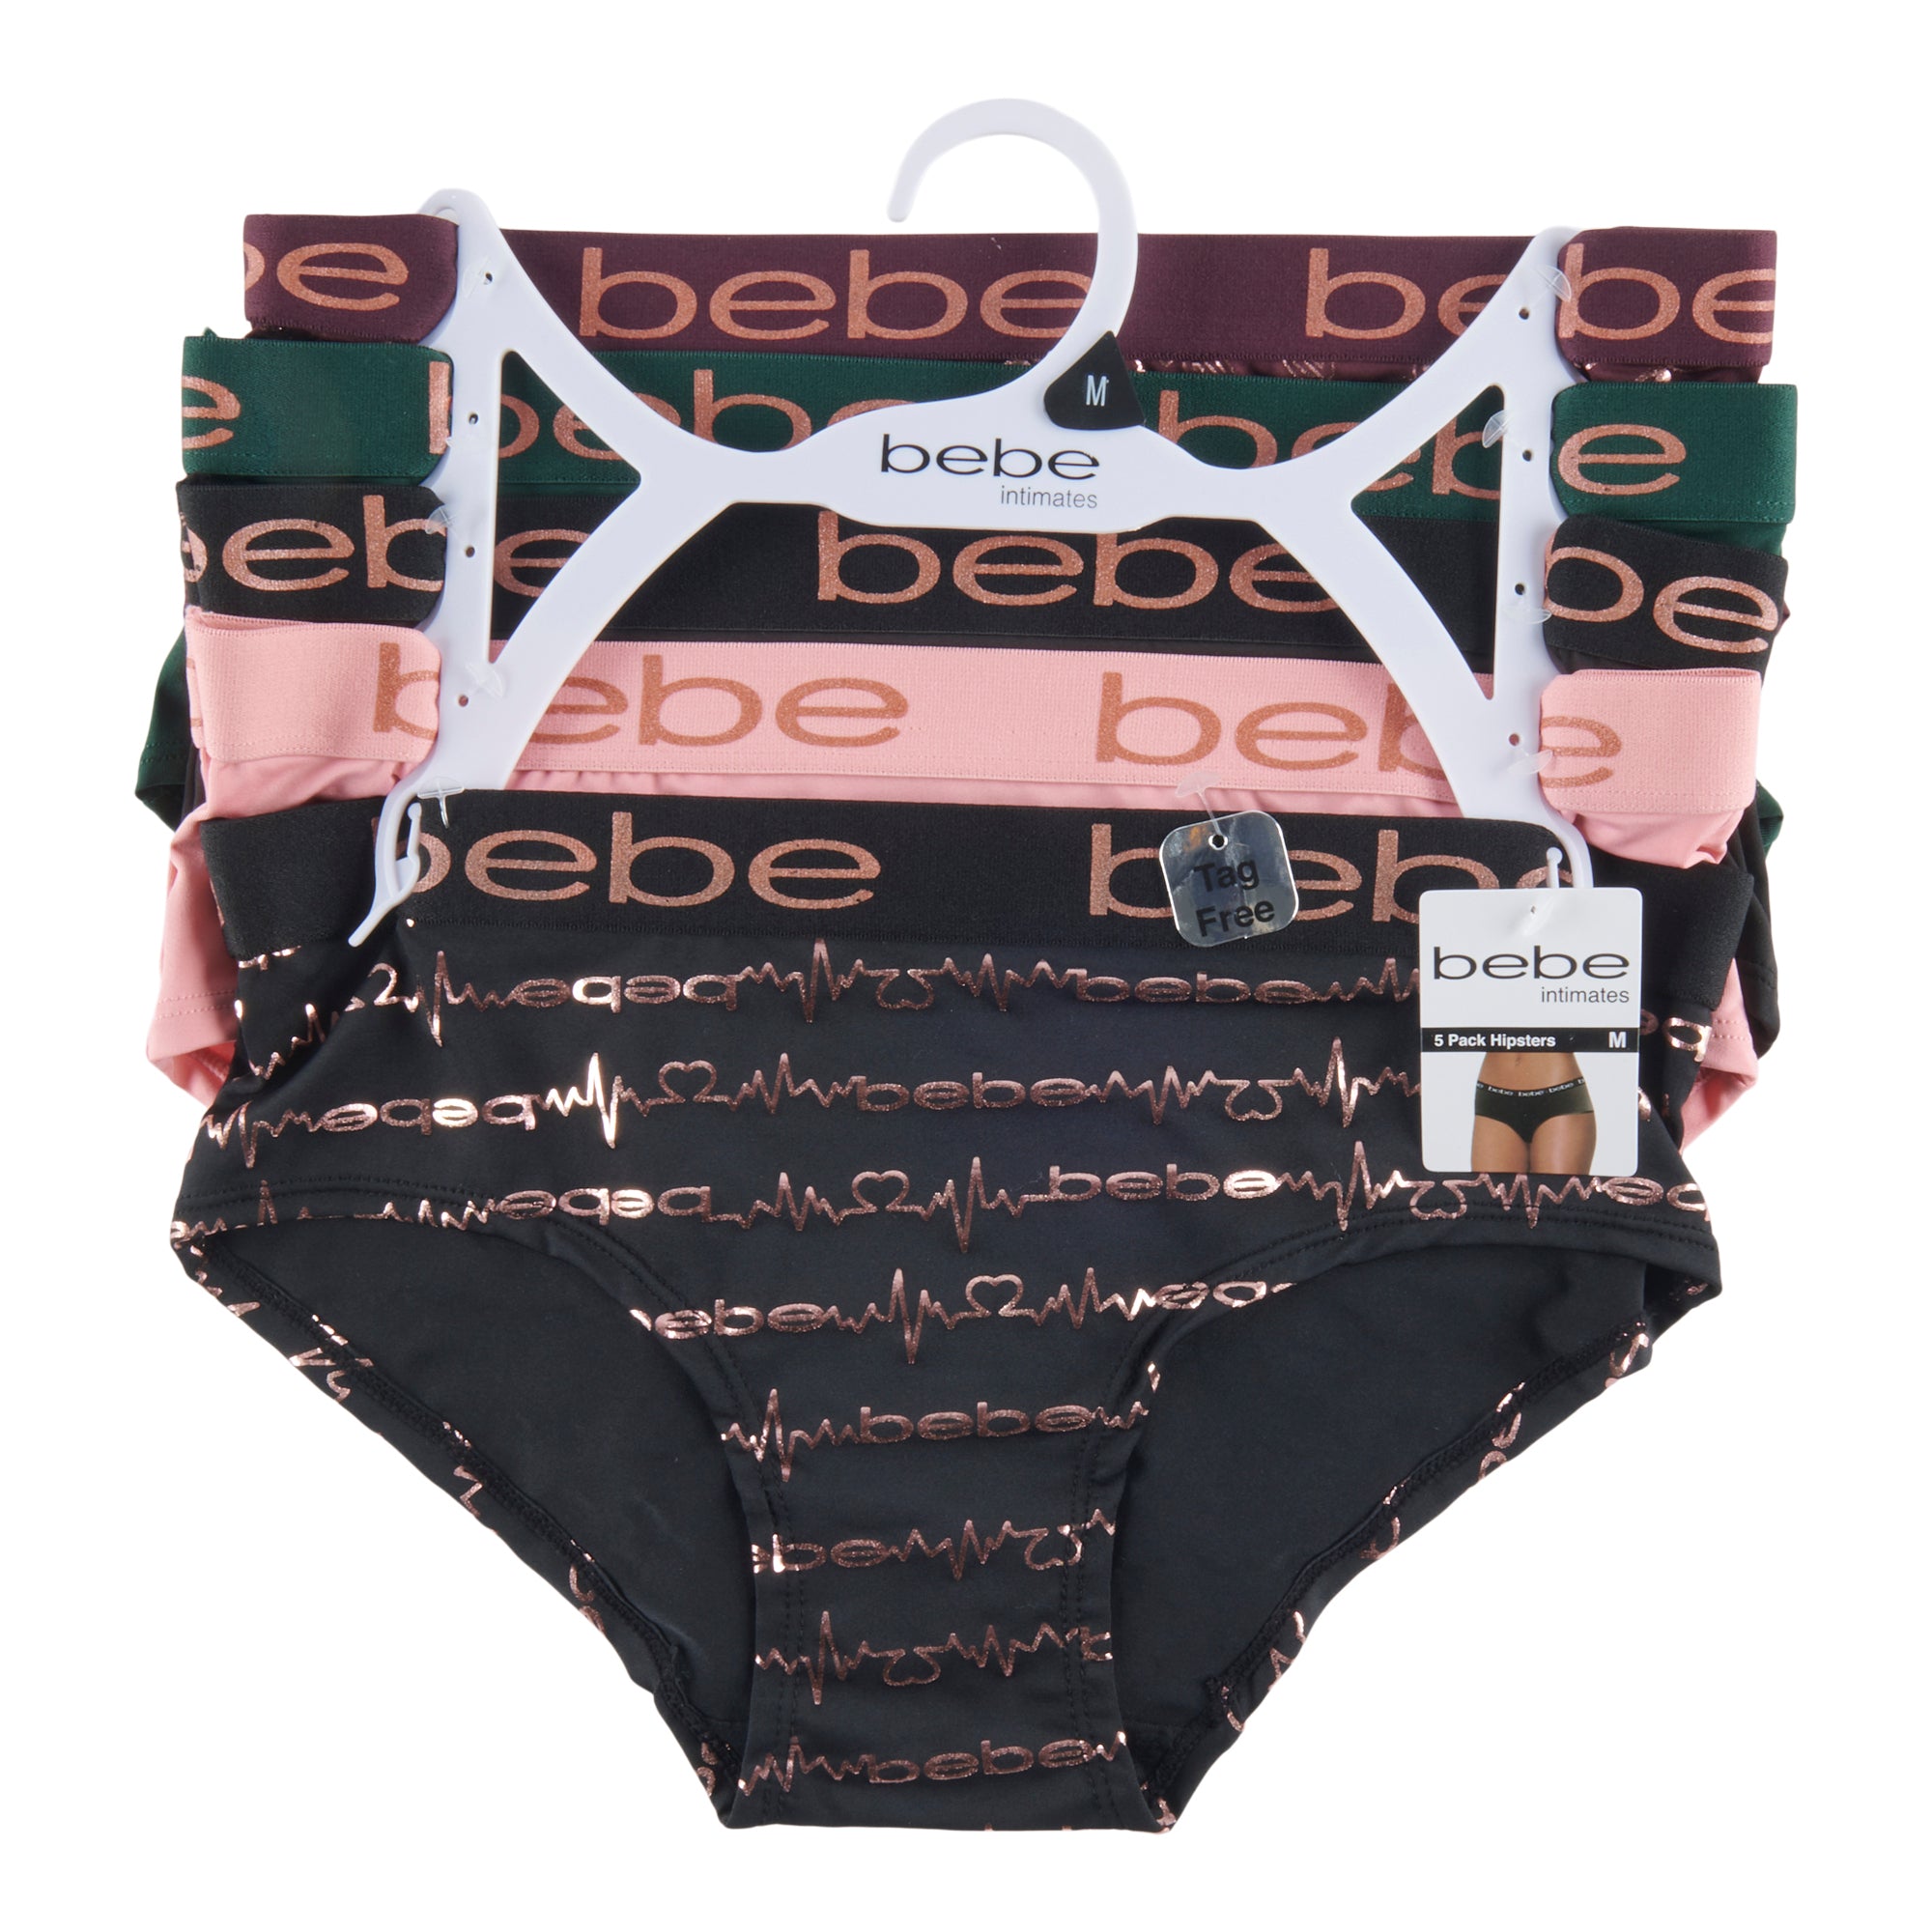 Bebe Women's Hipster Underwear, 5-Pack